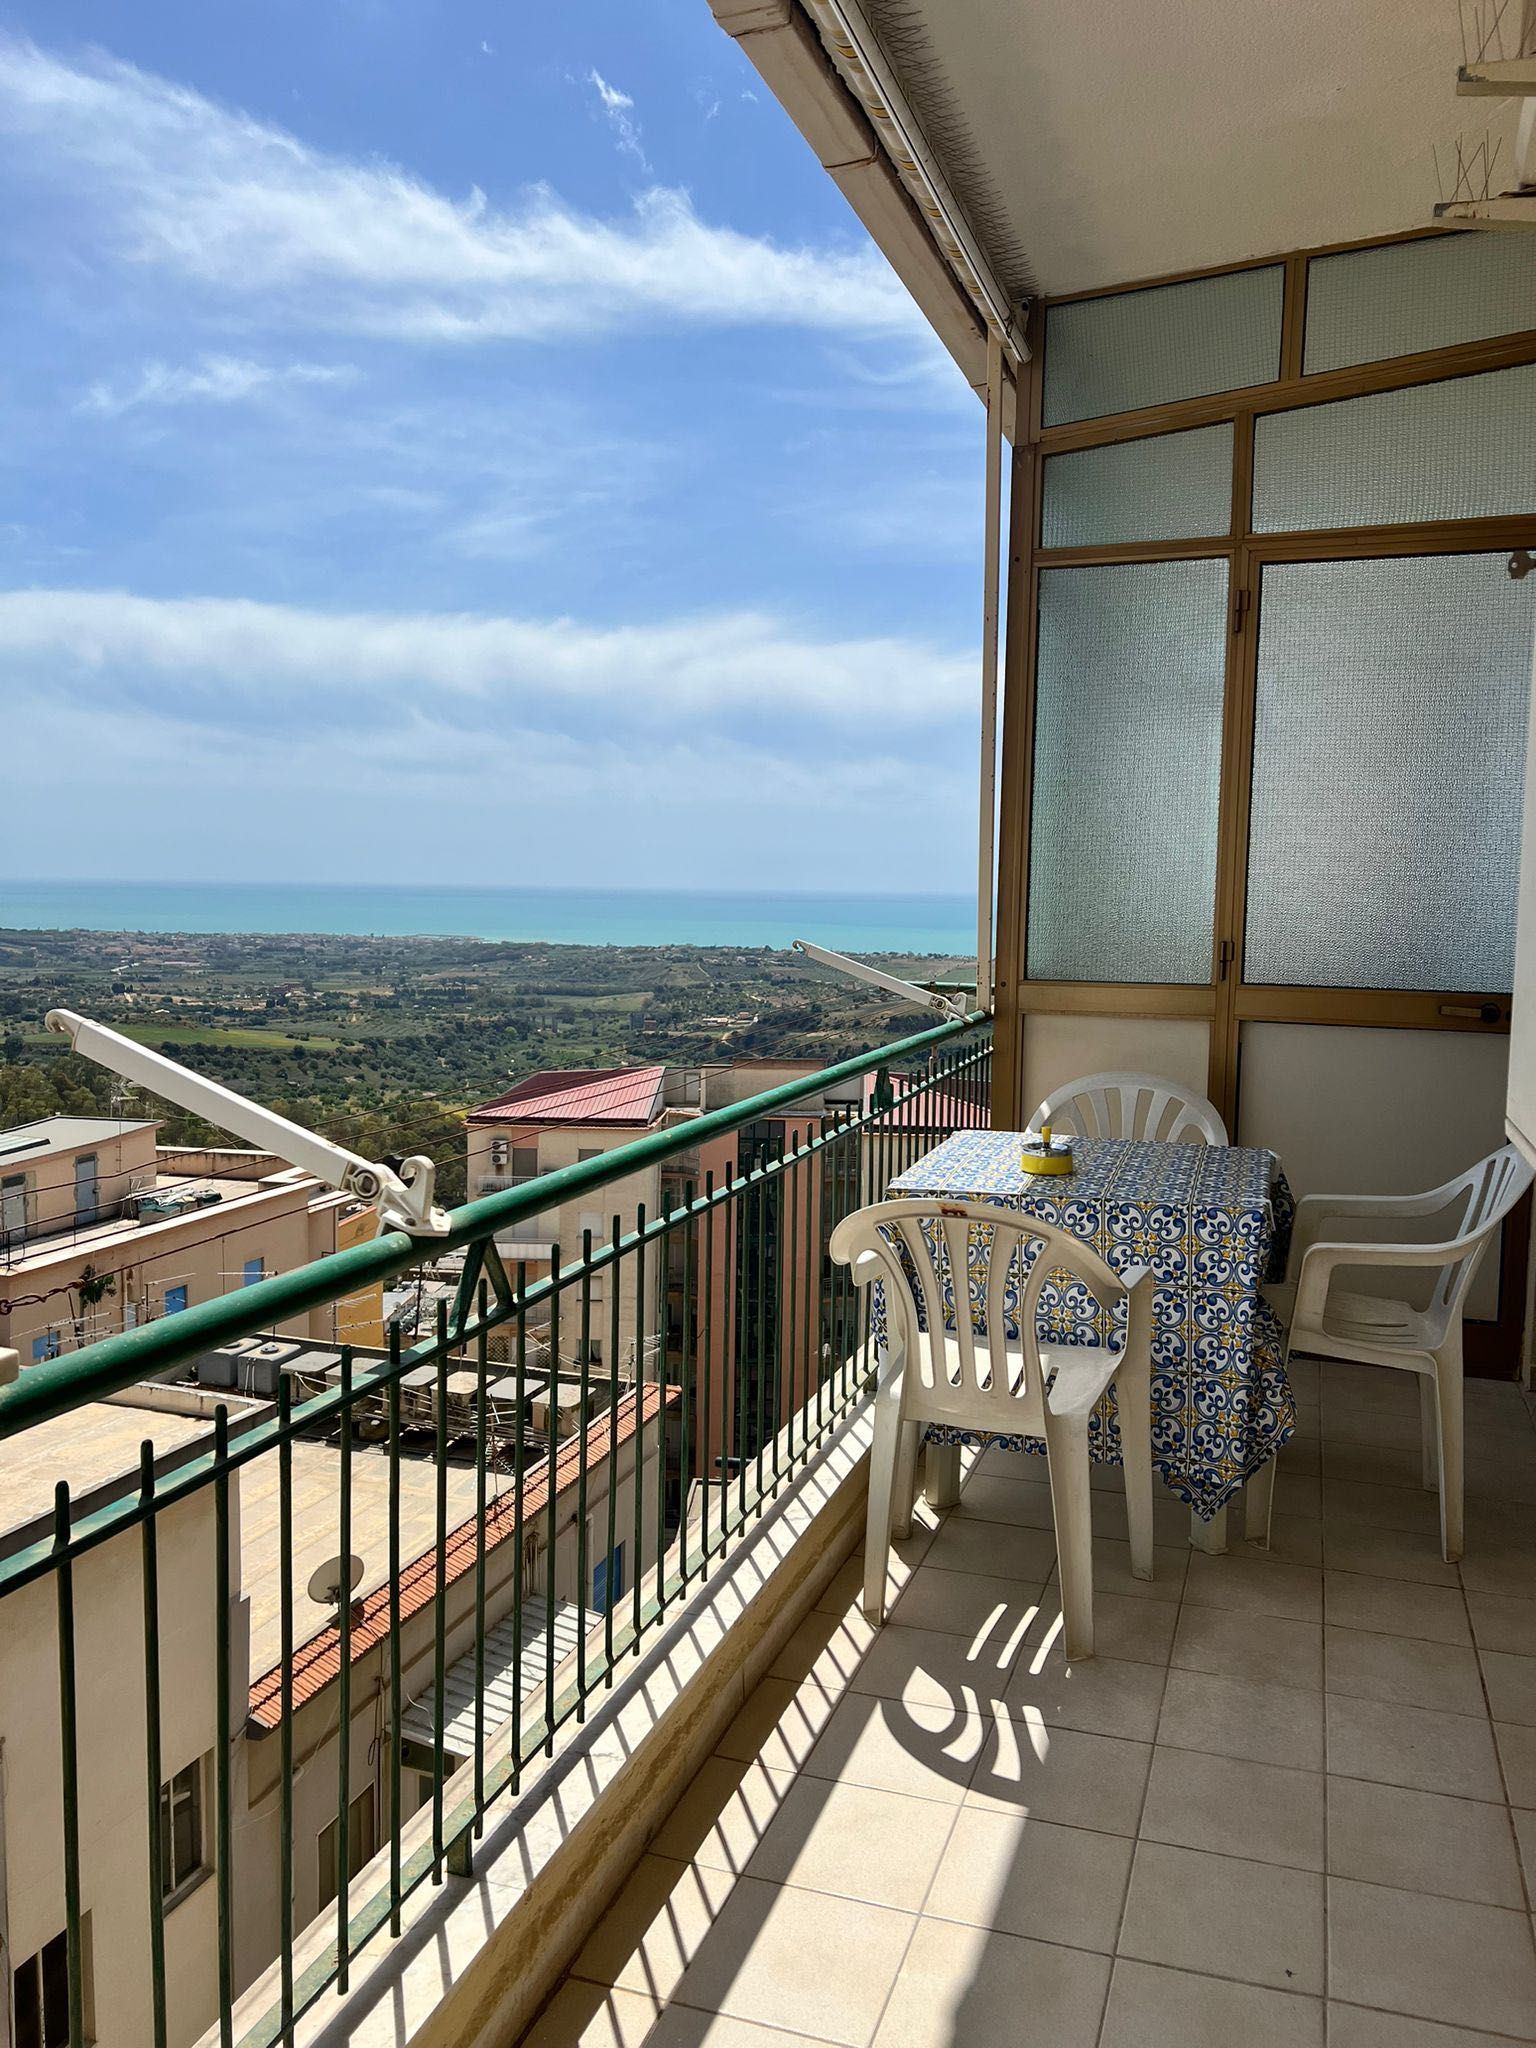 Apartament na wakacje na Sycylii